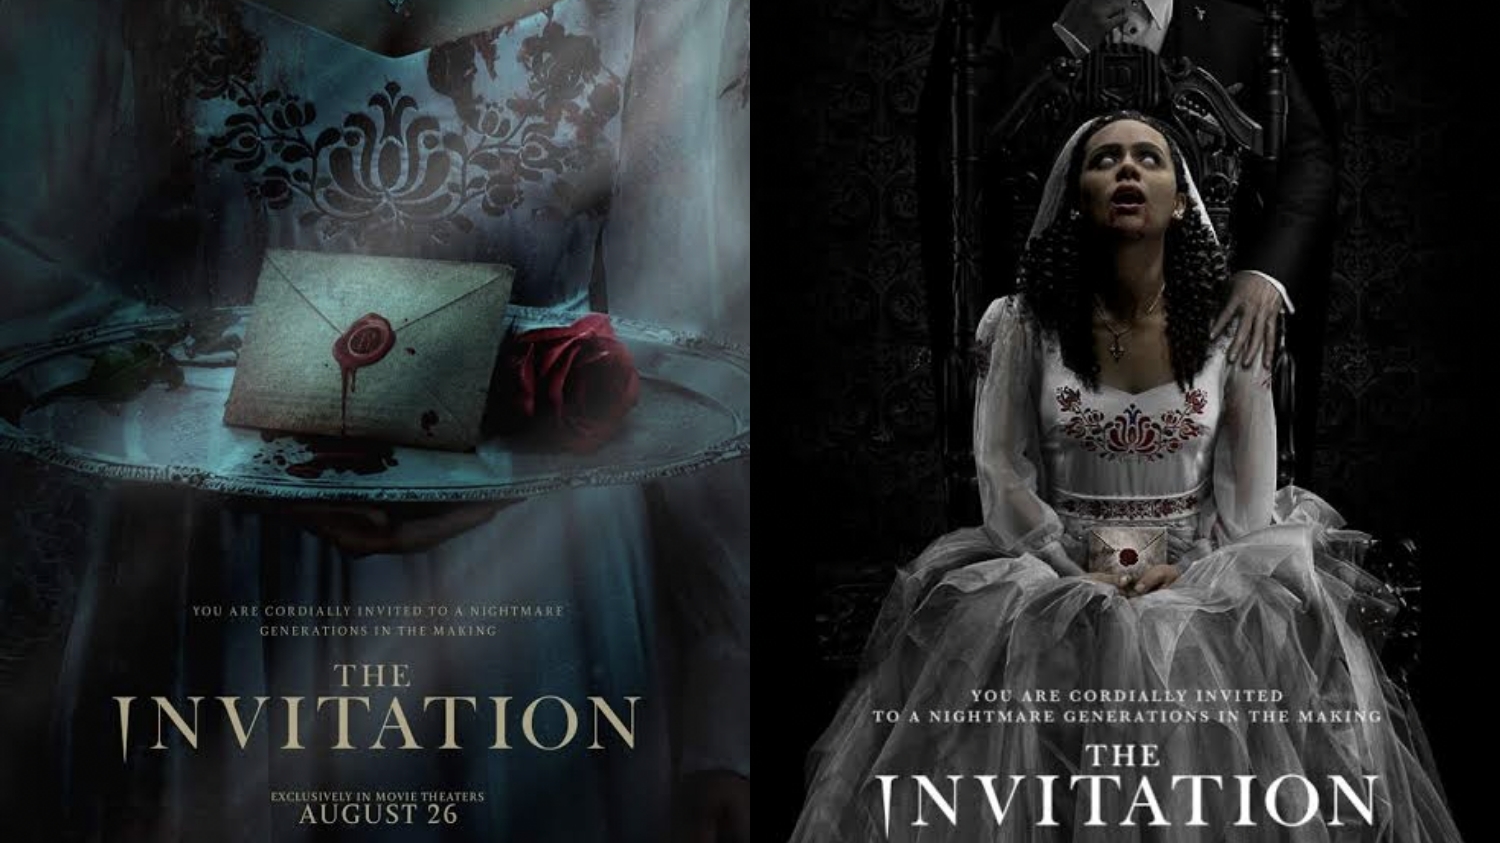 Film Horor The Invitation Kisah Keluarga Vampir yang Mengerikan, ini Sinopsisnya